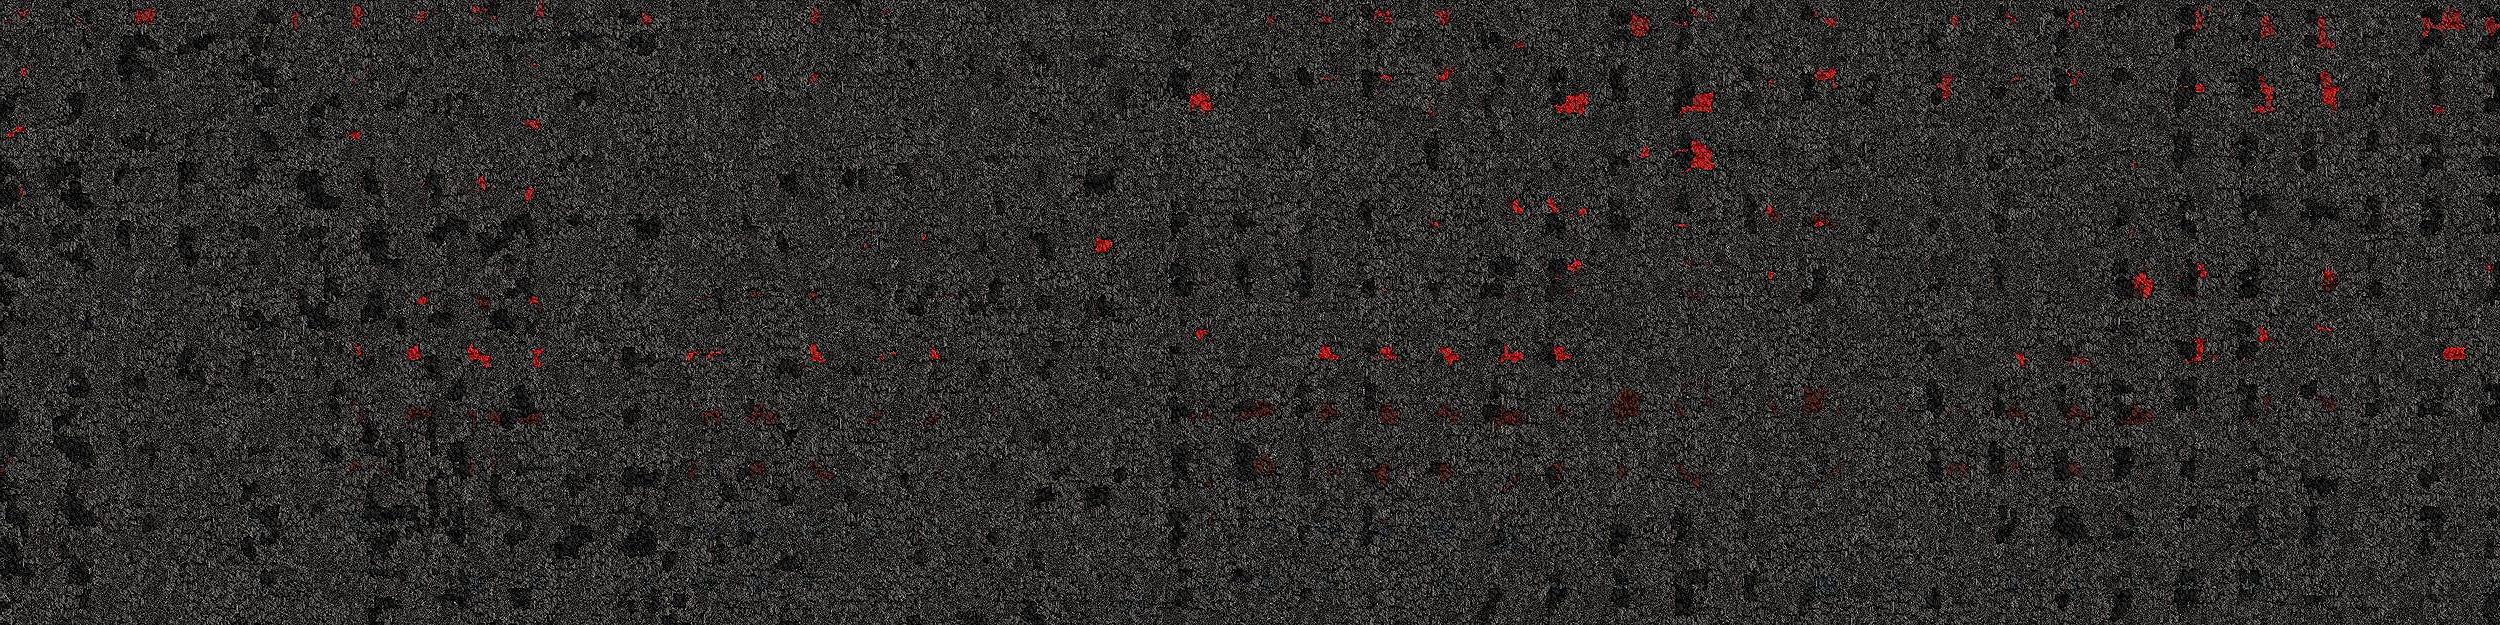 Speckled Carpet Tile In Eclipse numéro d’image 5